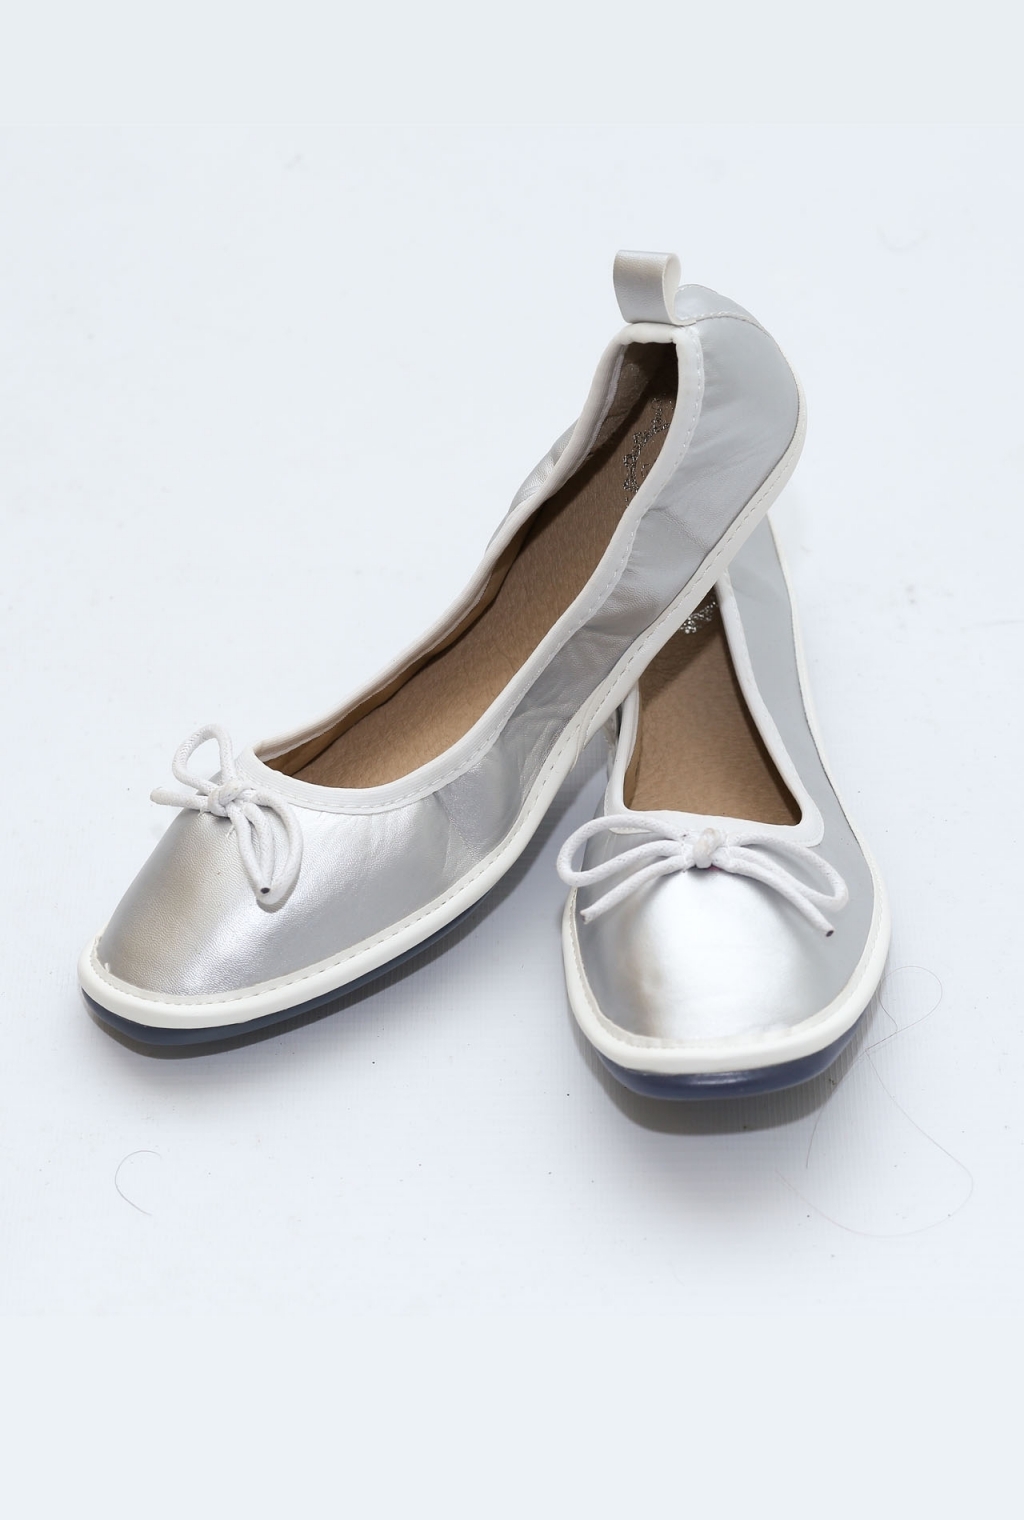 buy ballet shoes online